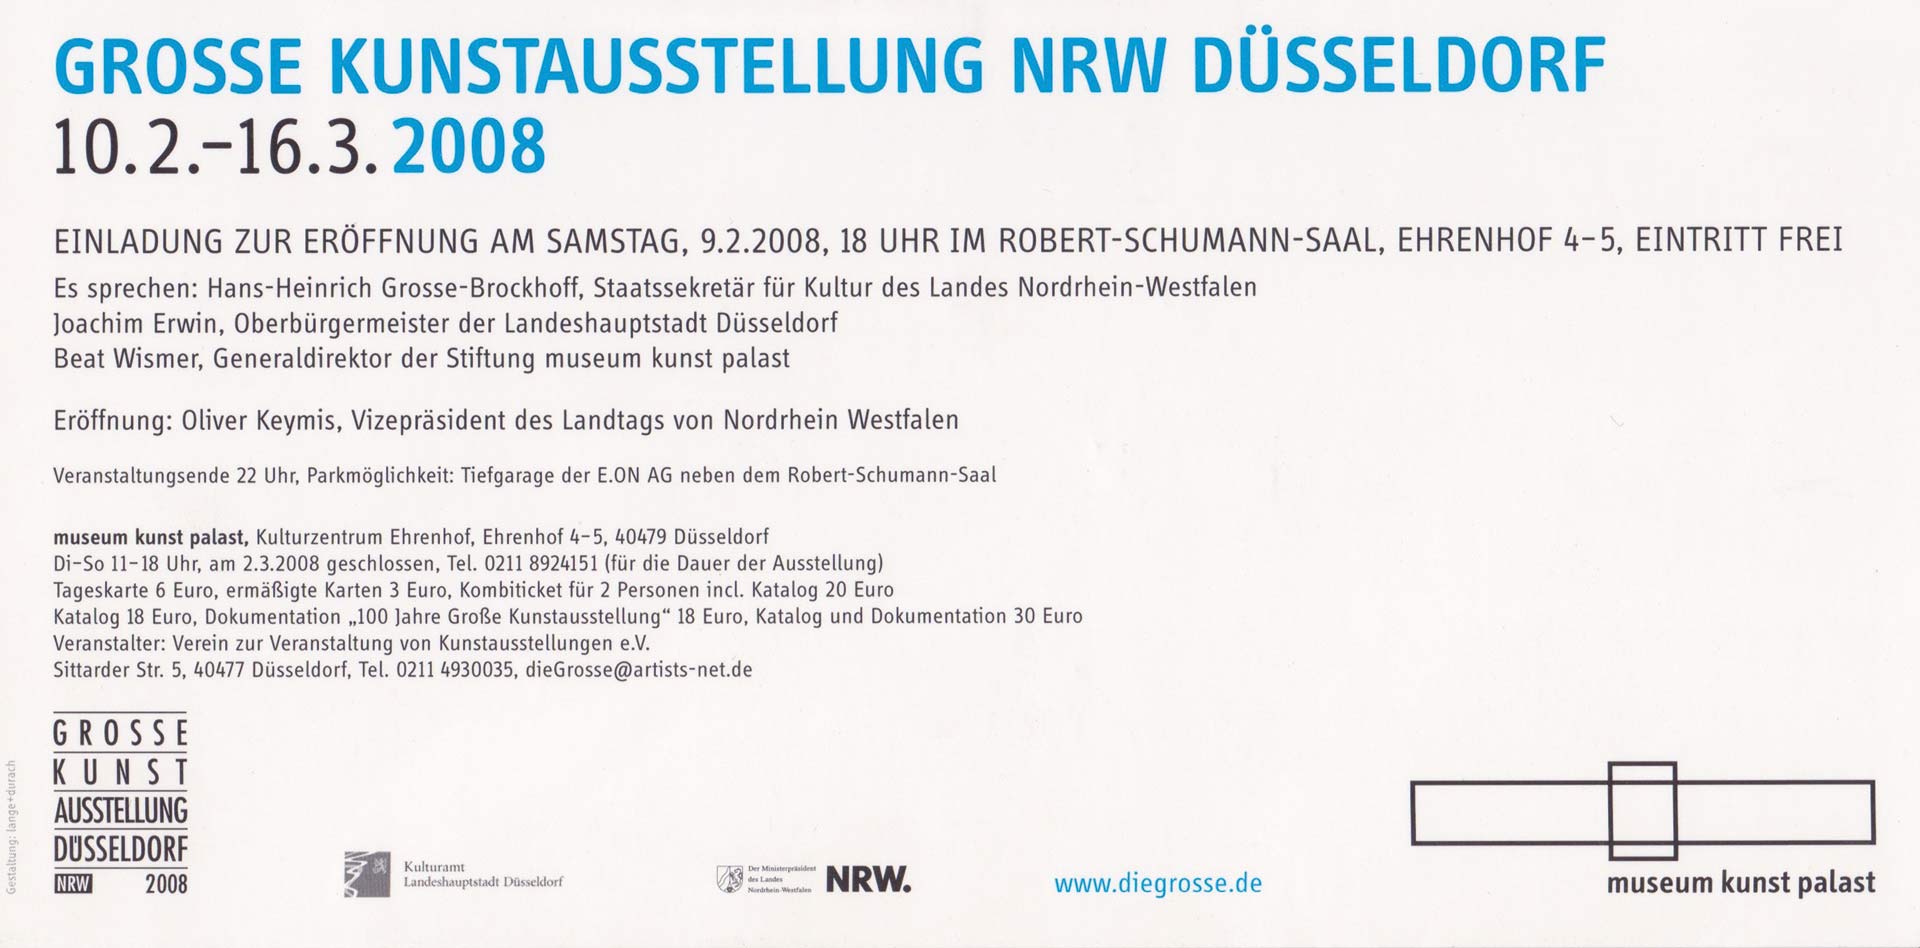 Invite | Grosse Kunstaustellung NRW | Dusseldorf 2008 | Weseler